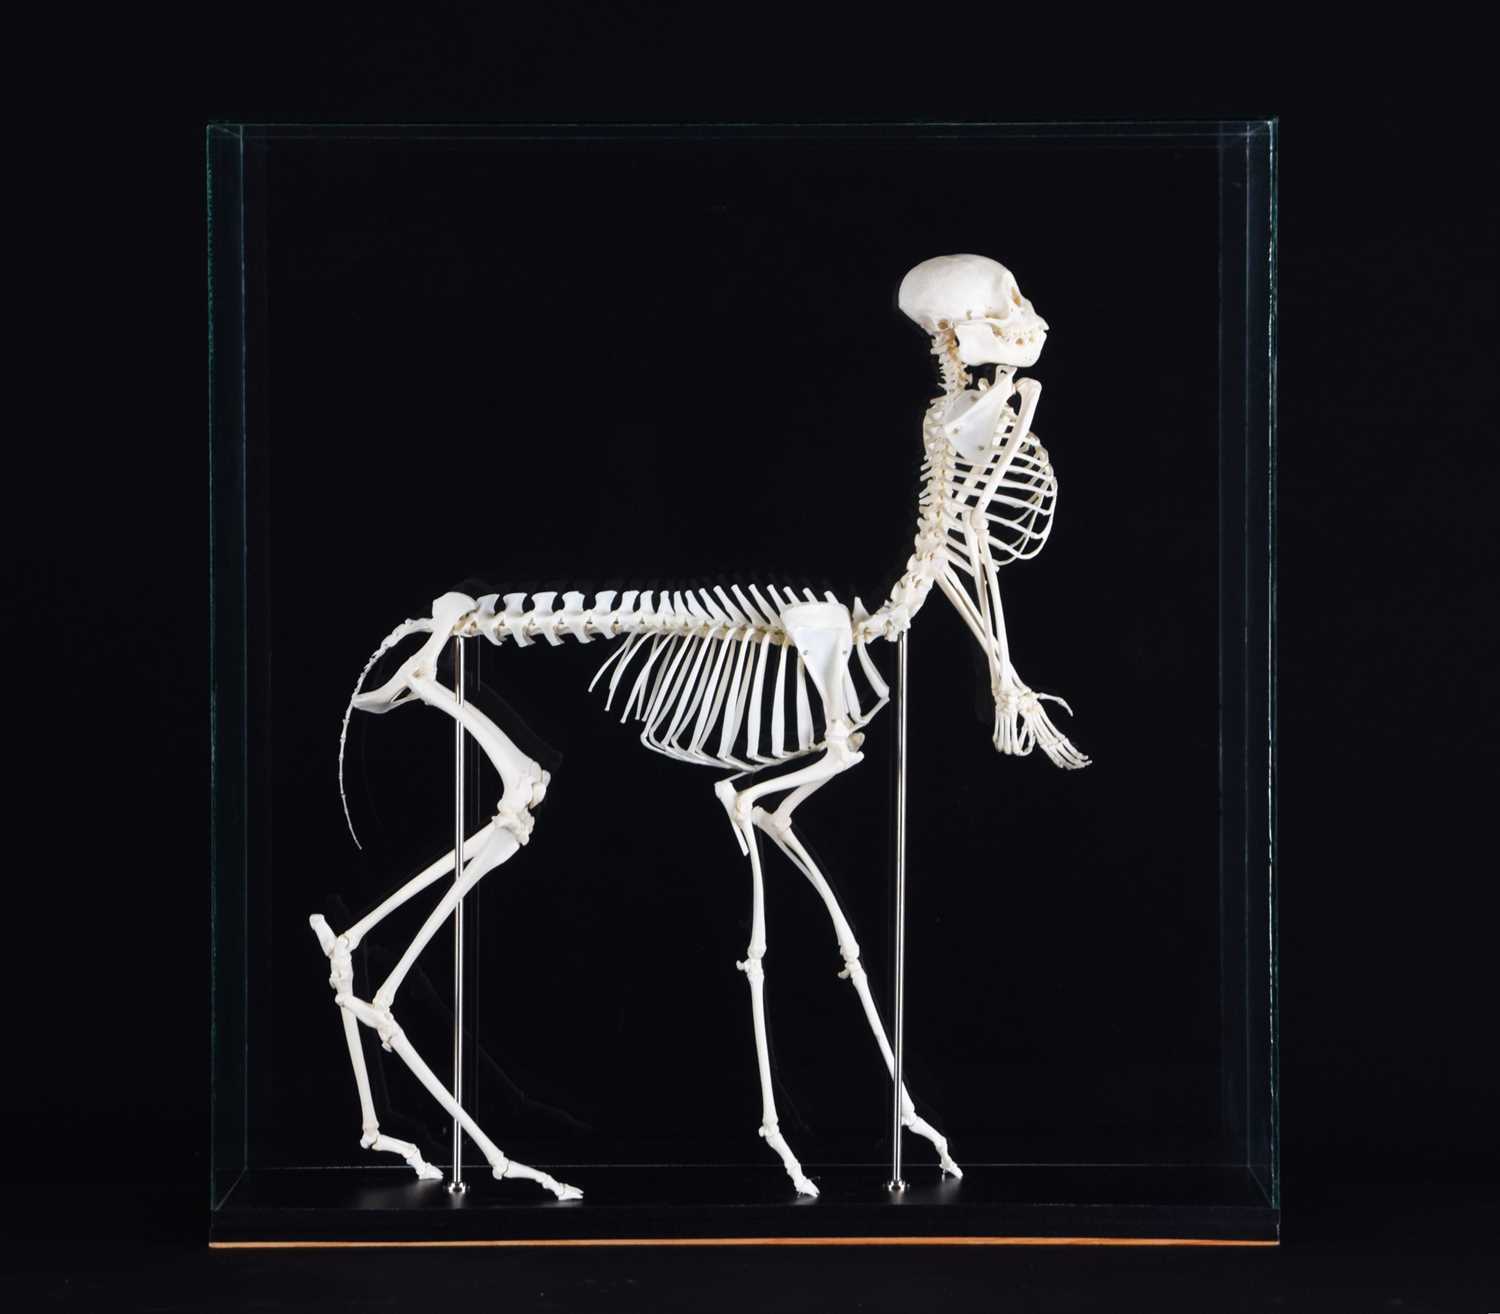 Skeletons/Anatomy: A Composed Centaur Skeleton, modern, a complete articulated skeleton of a